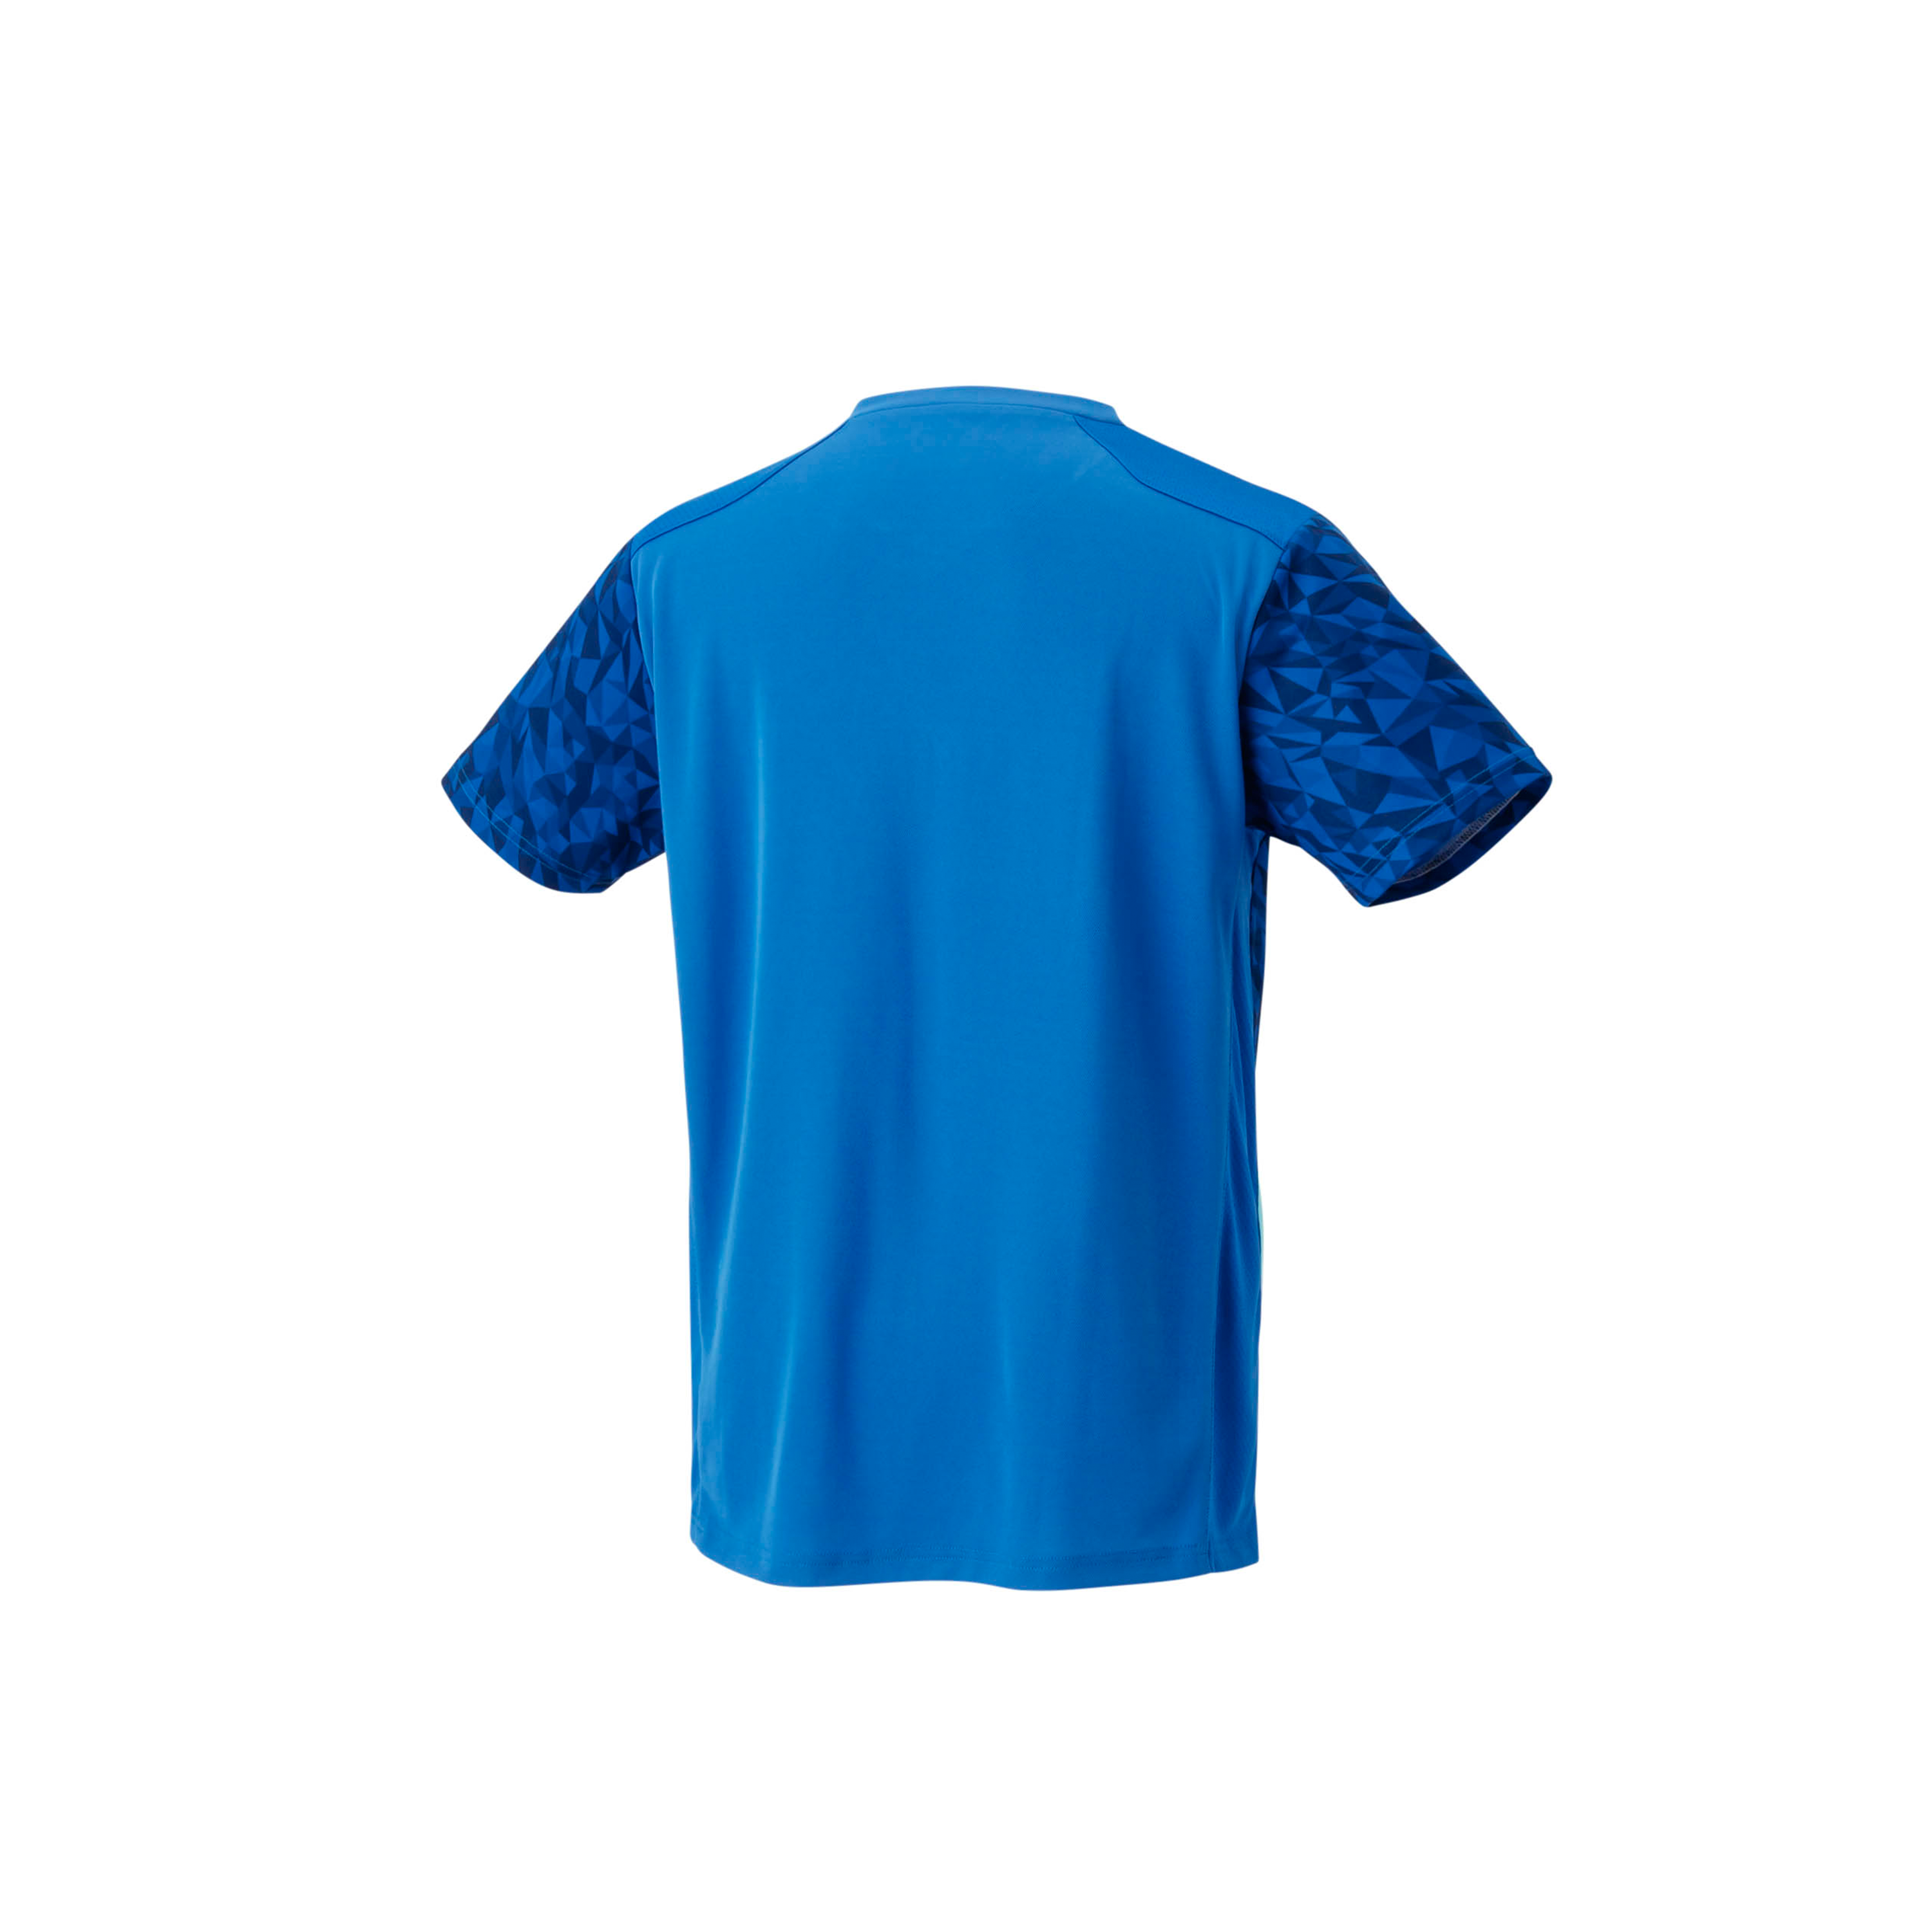 Yonex Japan National Badminton/ Sports Shirt 10555EX Blue MEN'S (Clearance)